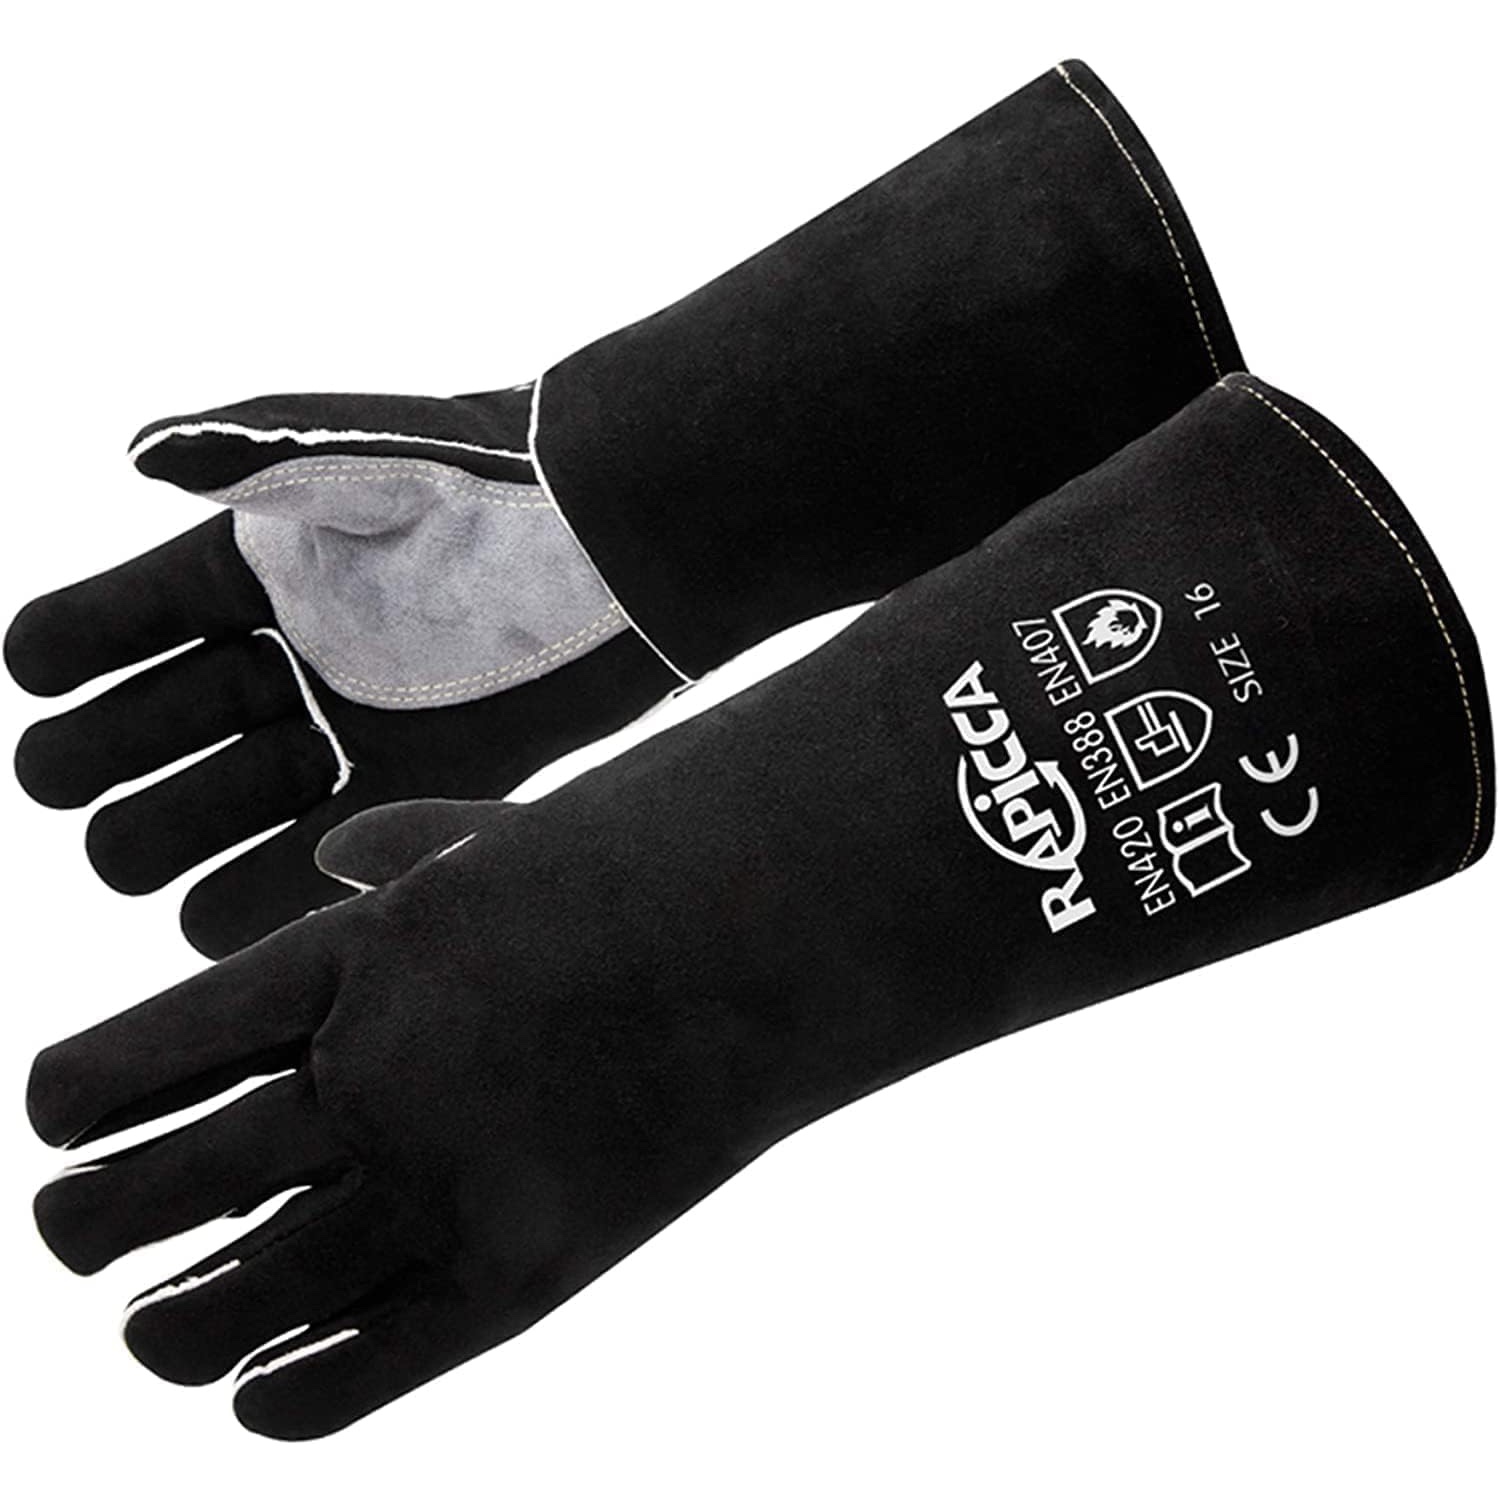 Rapicca 14-Inch Welding Gloves